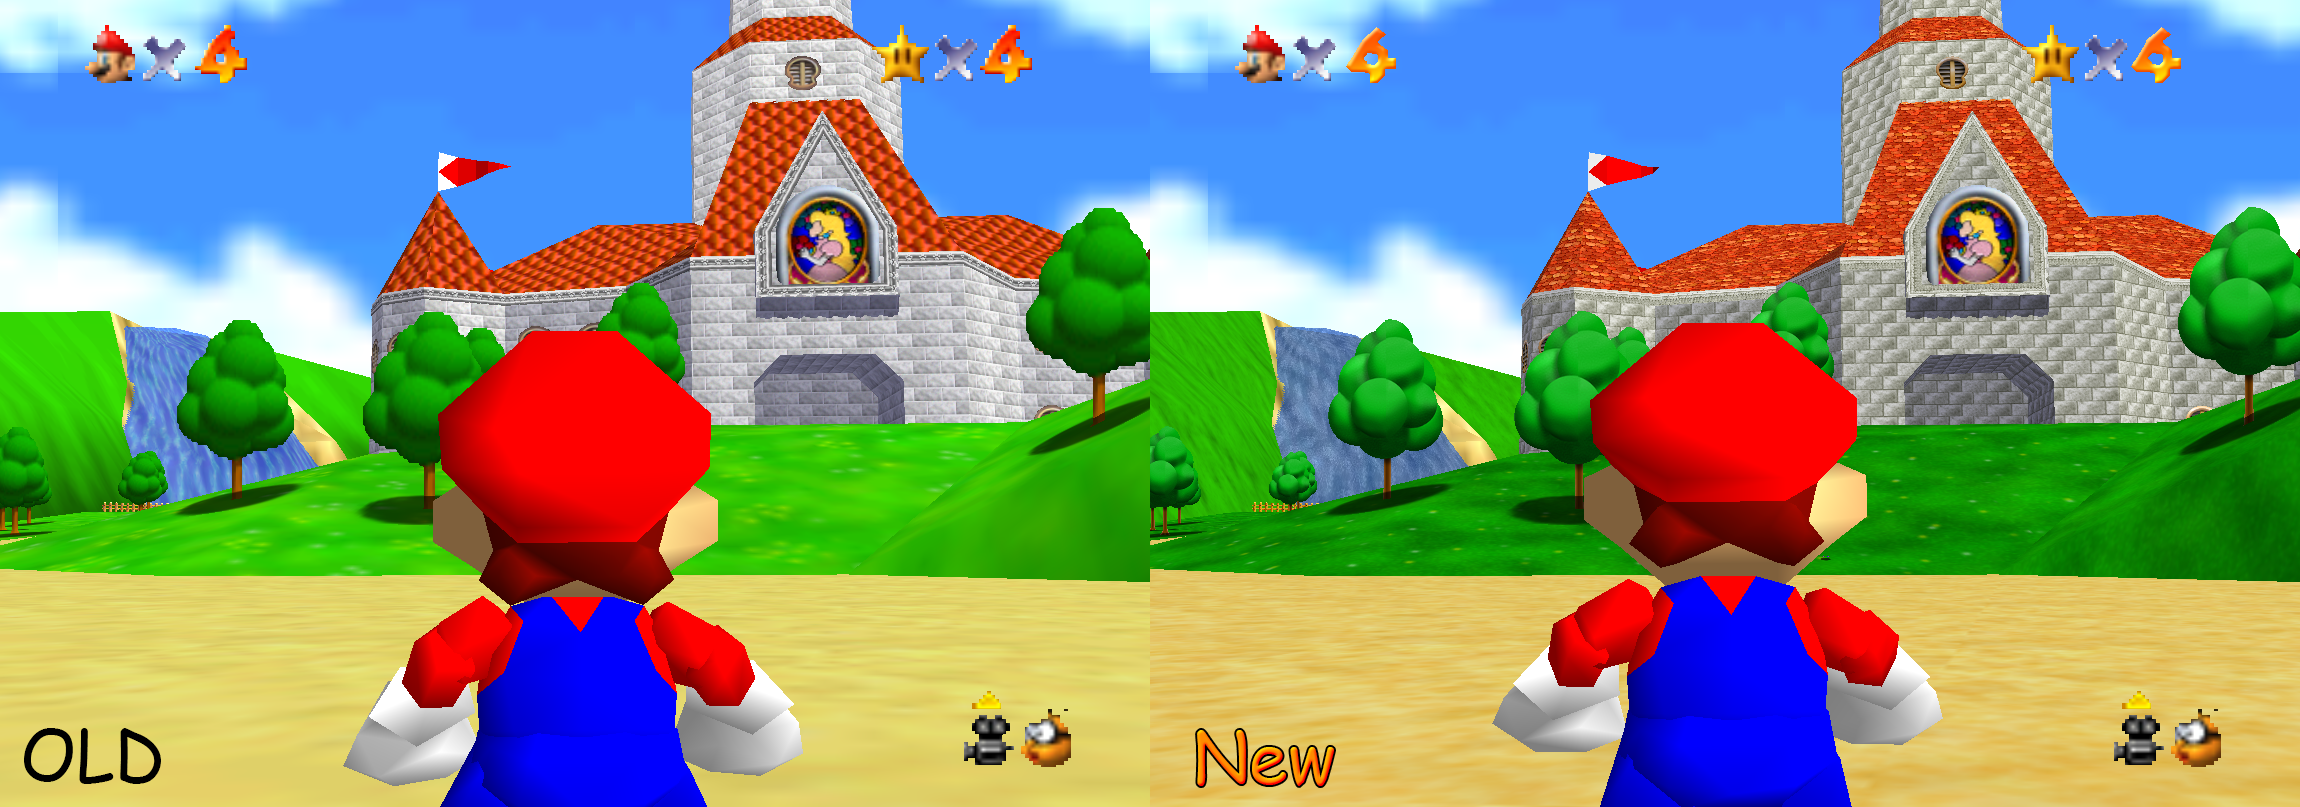 Top Super Mario 64 Backgrounds Backgrounds